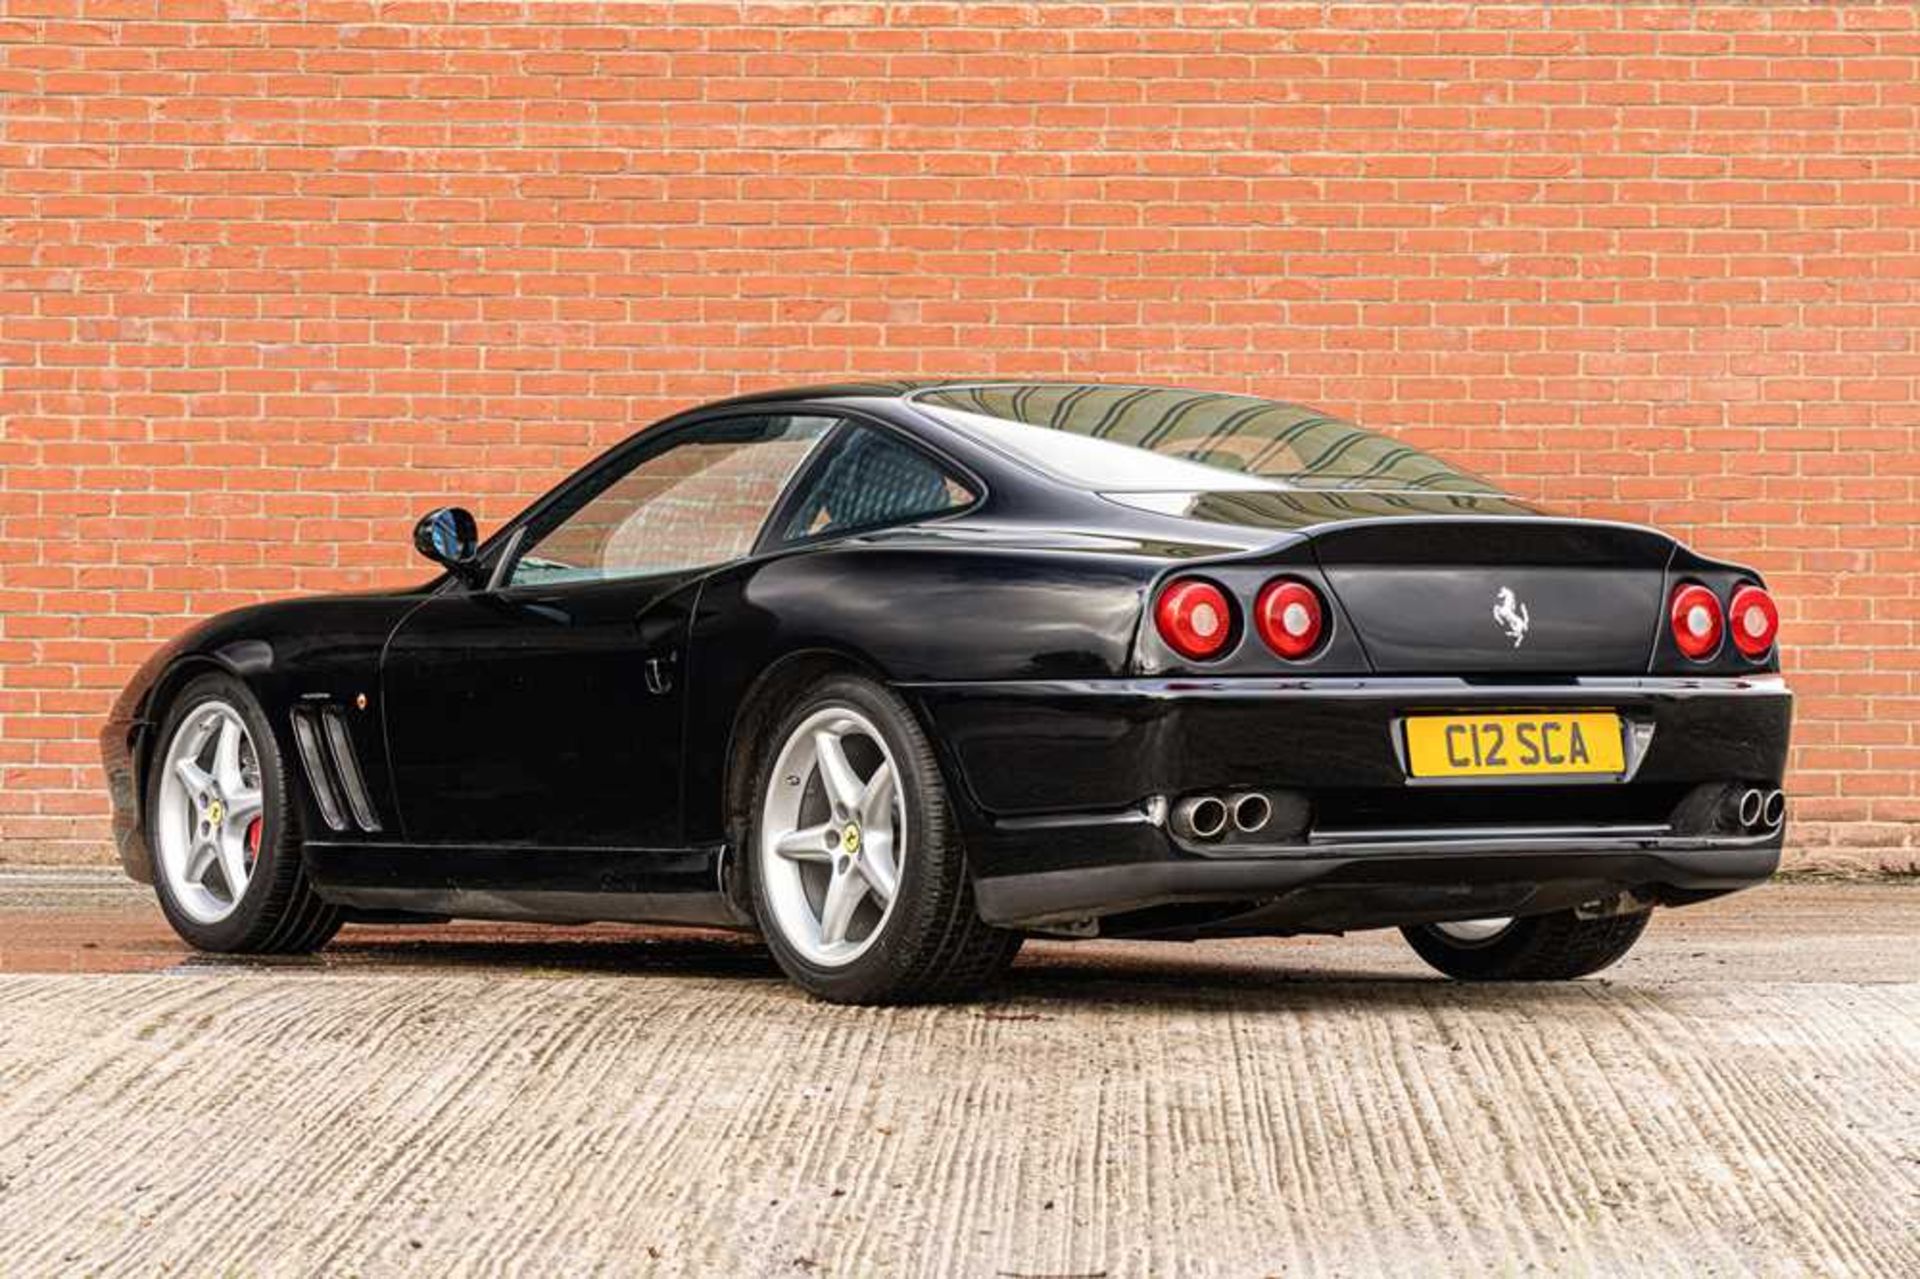 1998 Ferrari 550 Maranello (Manual) 1 of just 457 UK-supplied examples - Image 5 of 39